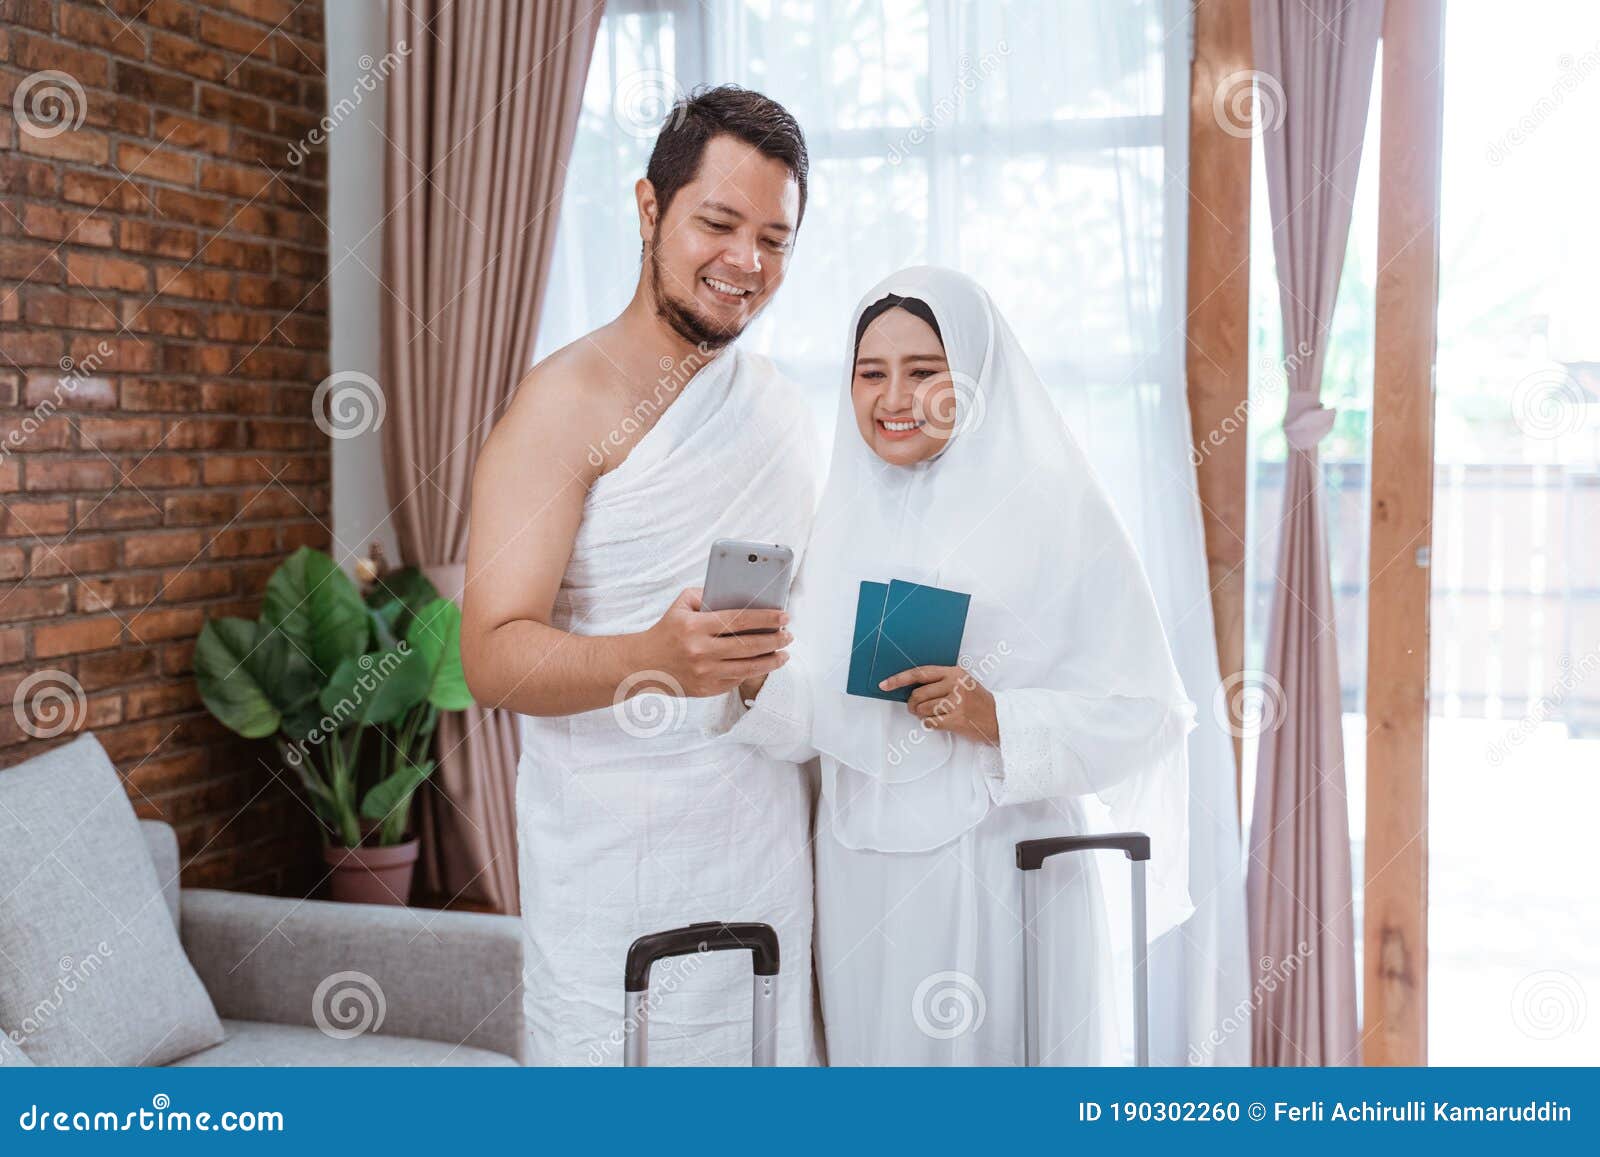 muslim couple making a phone call while umrah and hajj